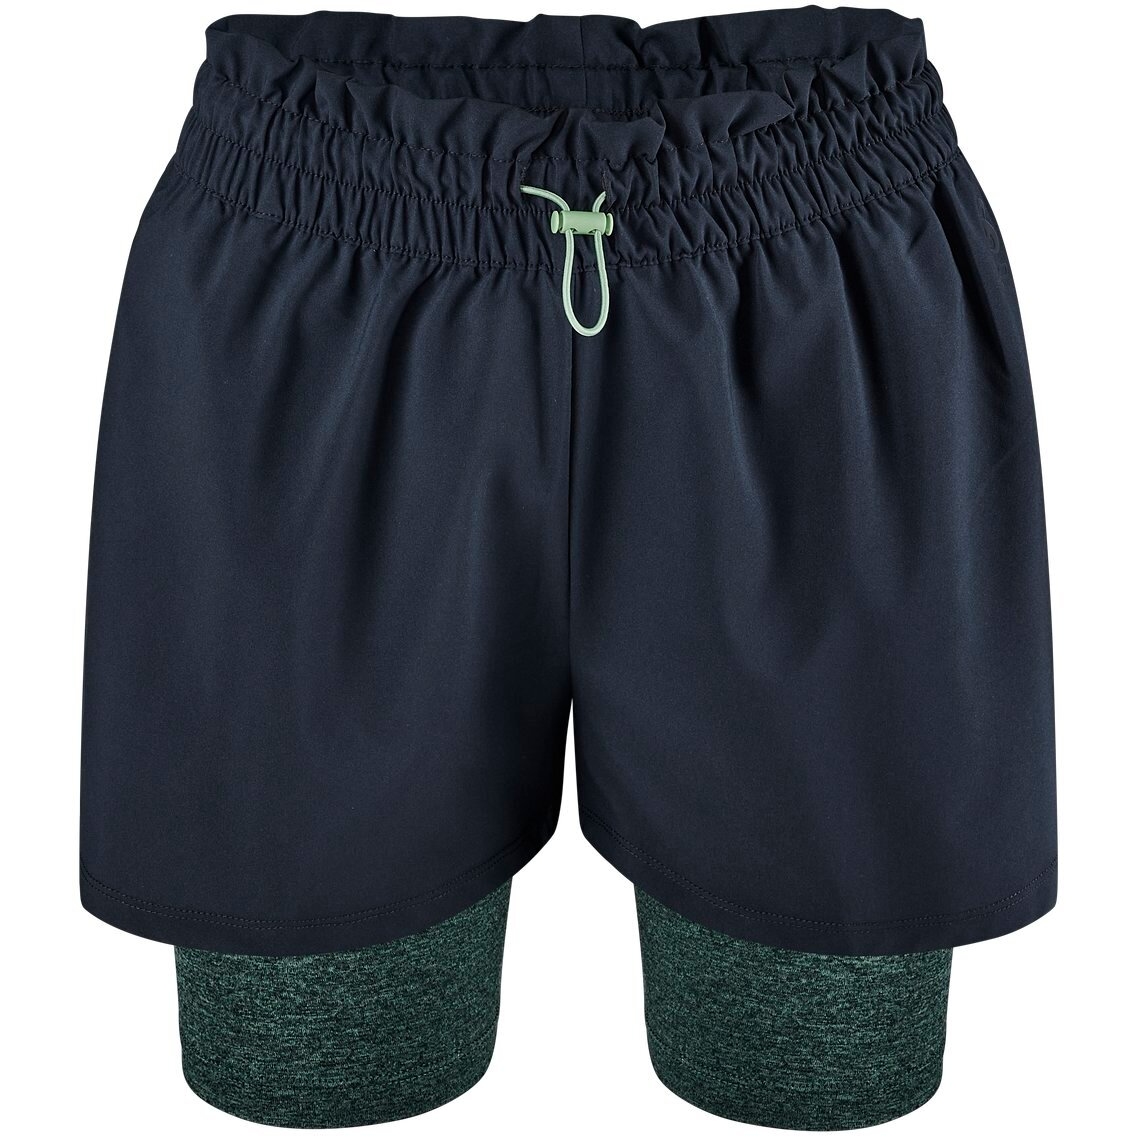 Productfoto van Odlo Active 365 5 Inch 2-in-1 Shorts Dames - black - camping green